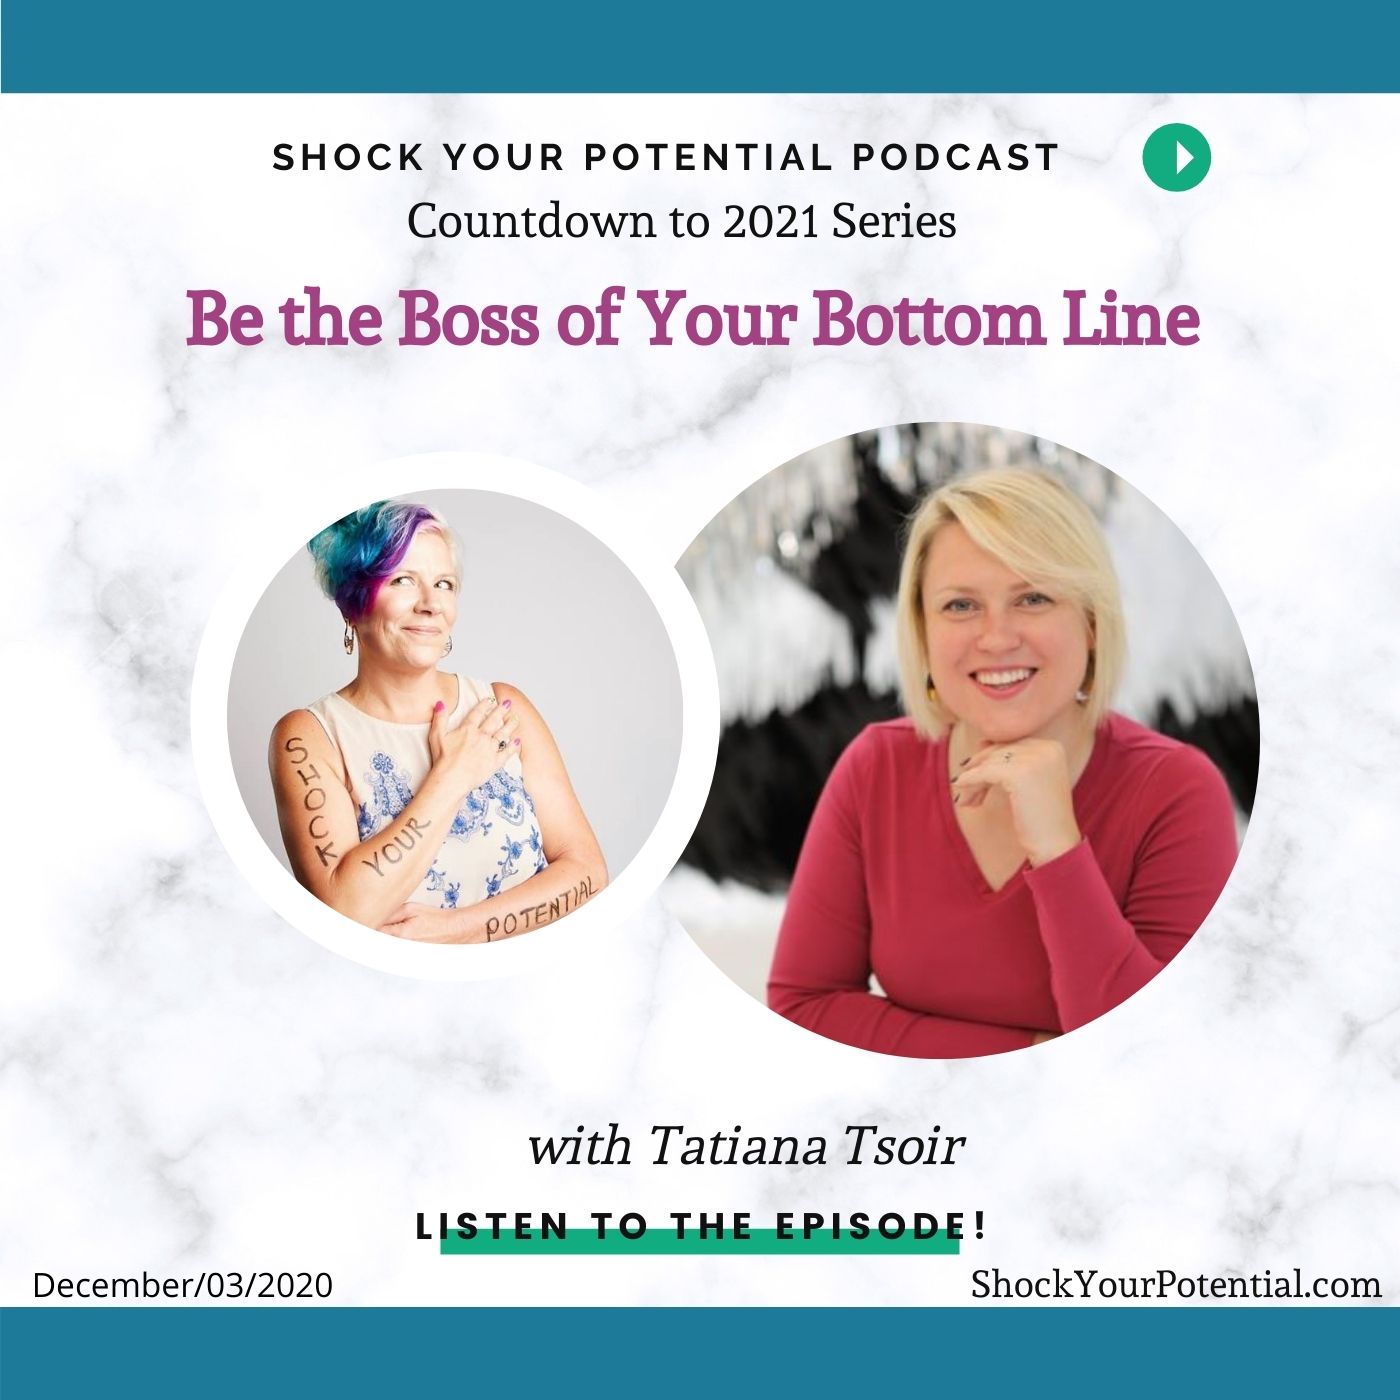 Be the Boss of Your Bottom Line – Tatiana Tsoir